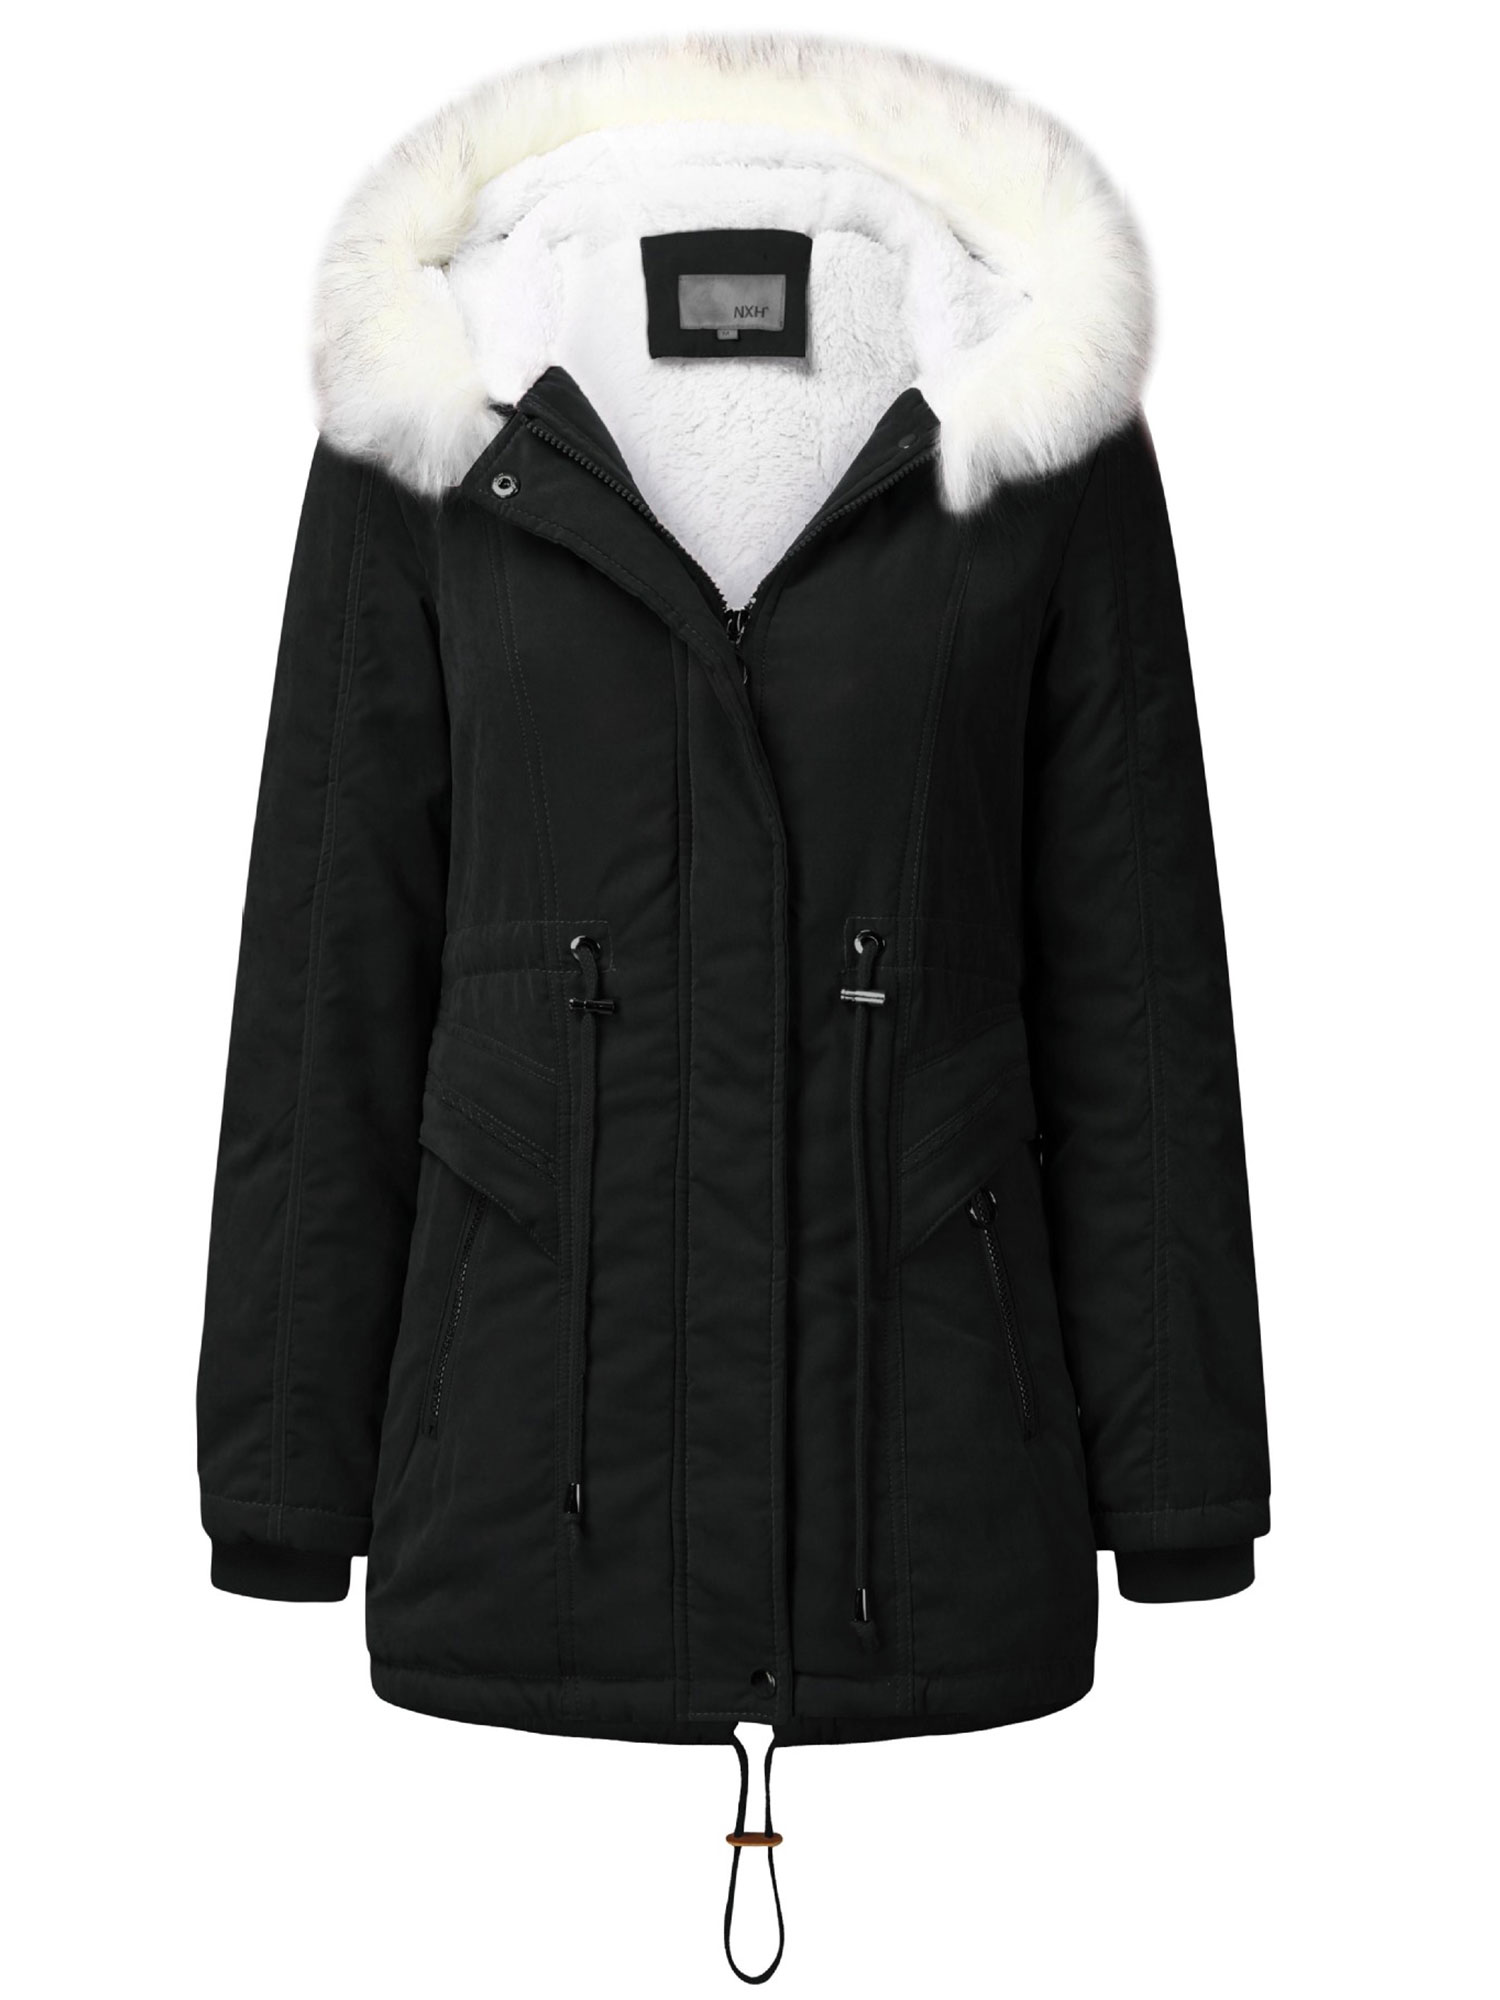 Womens Thicken Fur Hooded Warm Coat Jacket Trench Outwear Winter Parka Overcoat